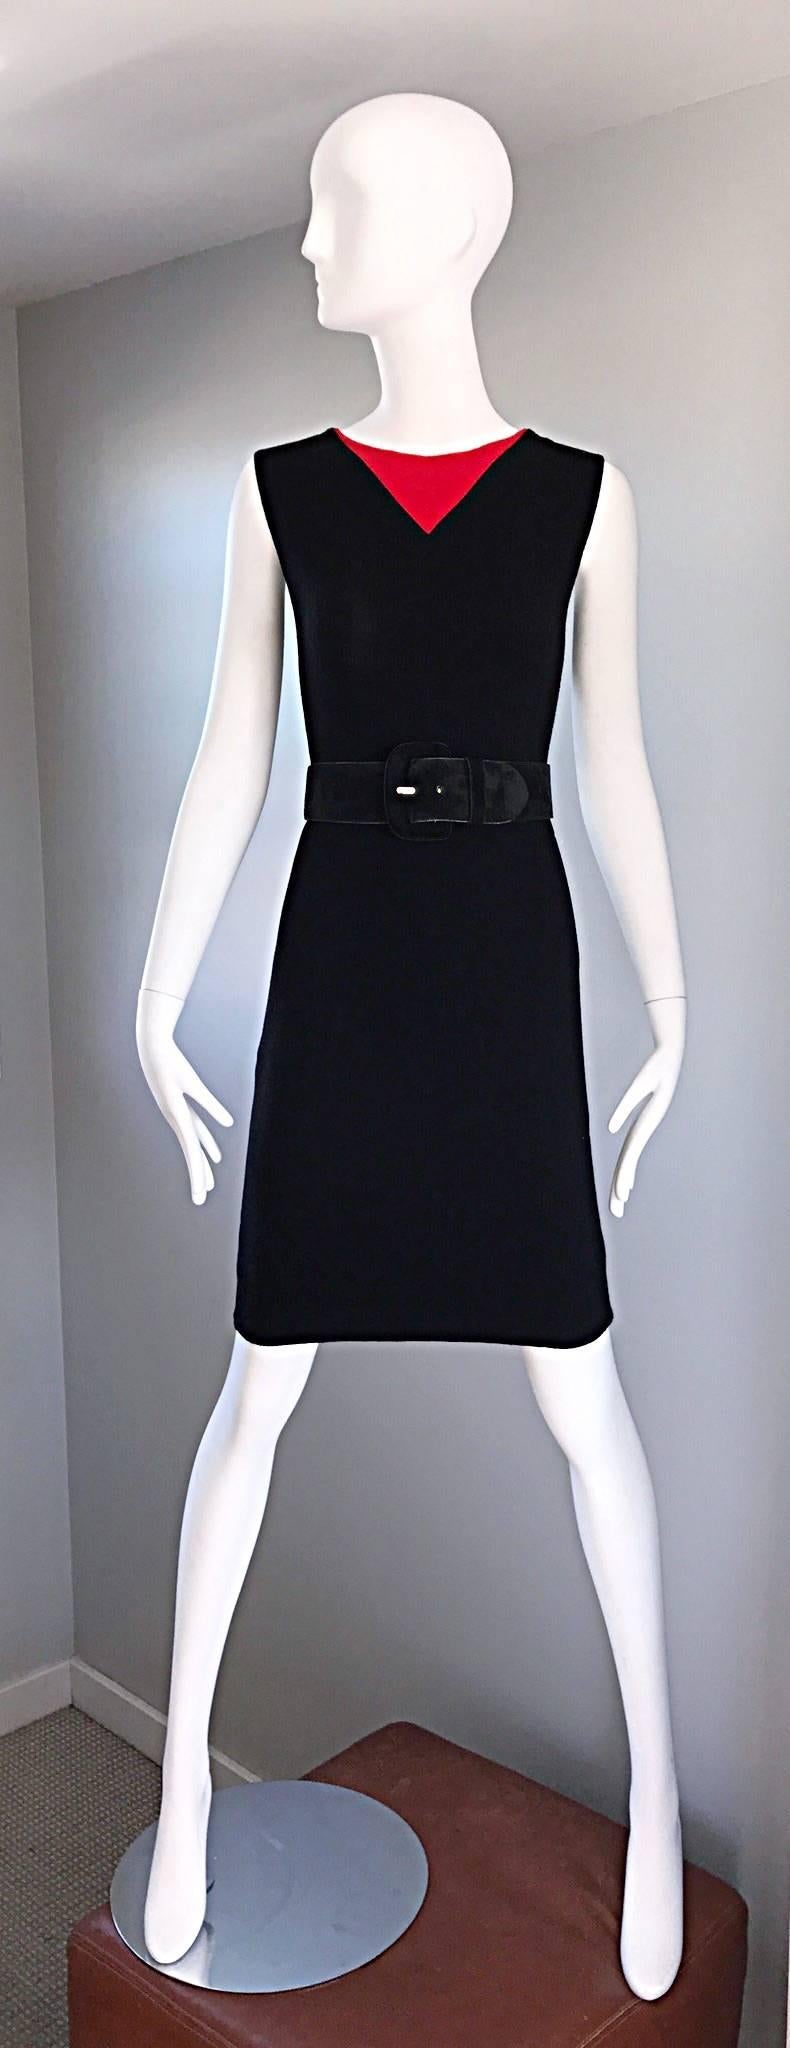 Vintage Bill Blass 1960s Black and Red Mod 60s Chic Wool Shift Dress LBD 1